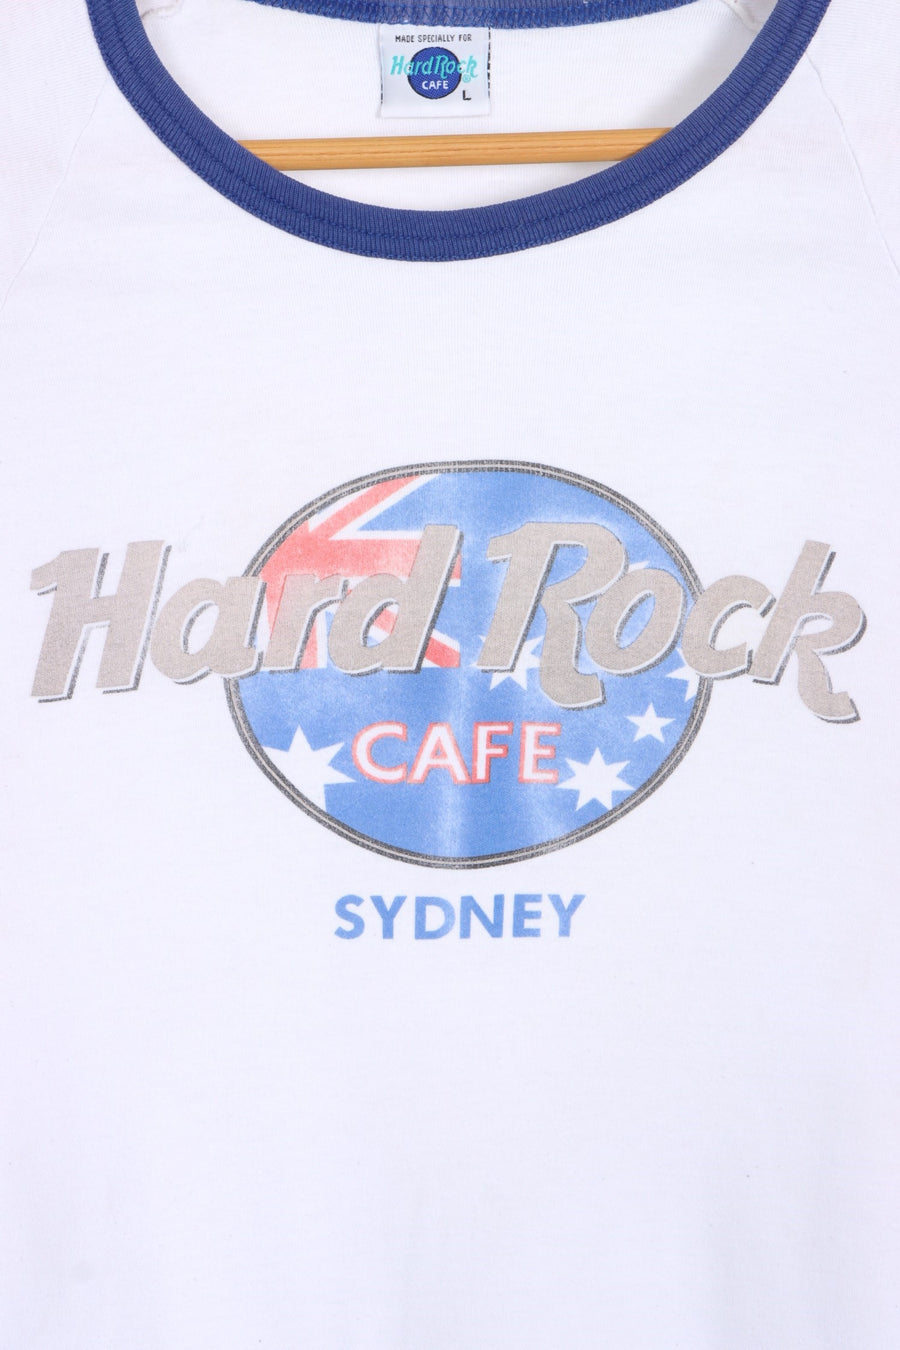 HARD ROCK CAFE Sydney Single Stitch Ringer Tee Australia Made (S)